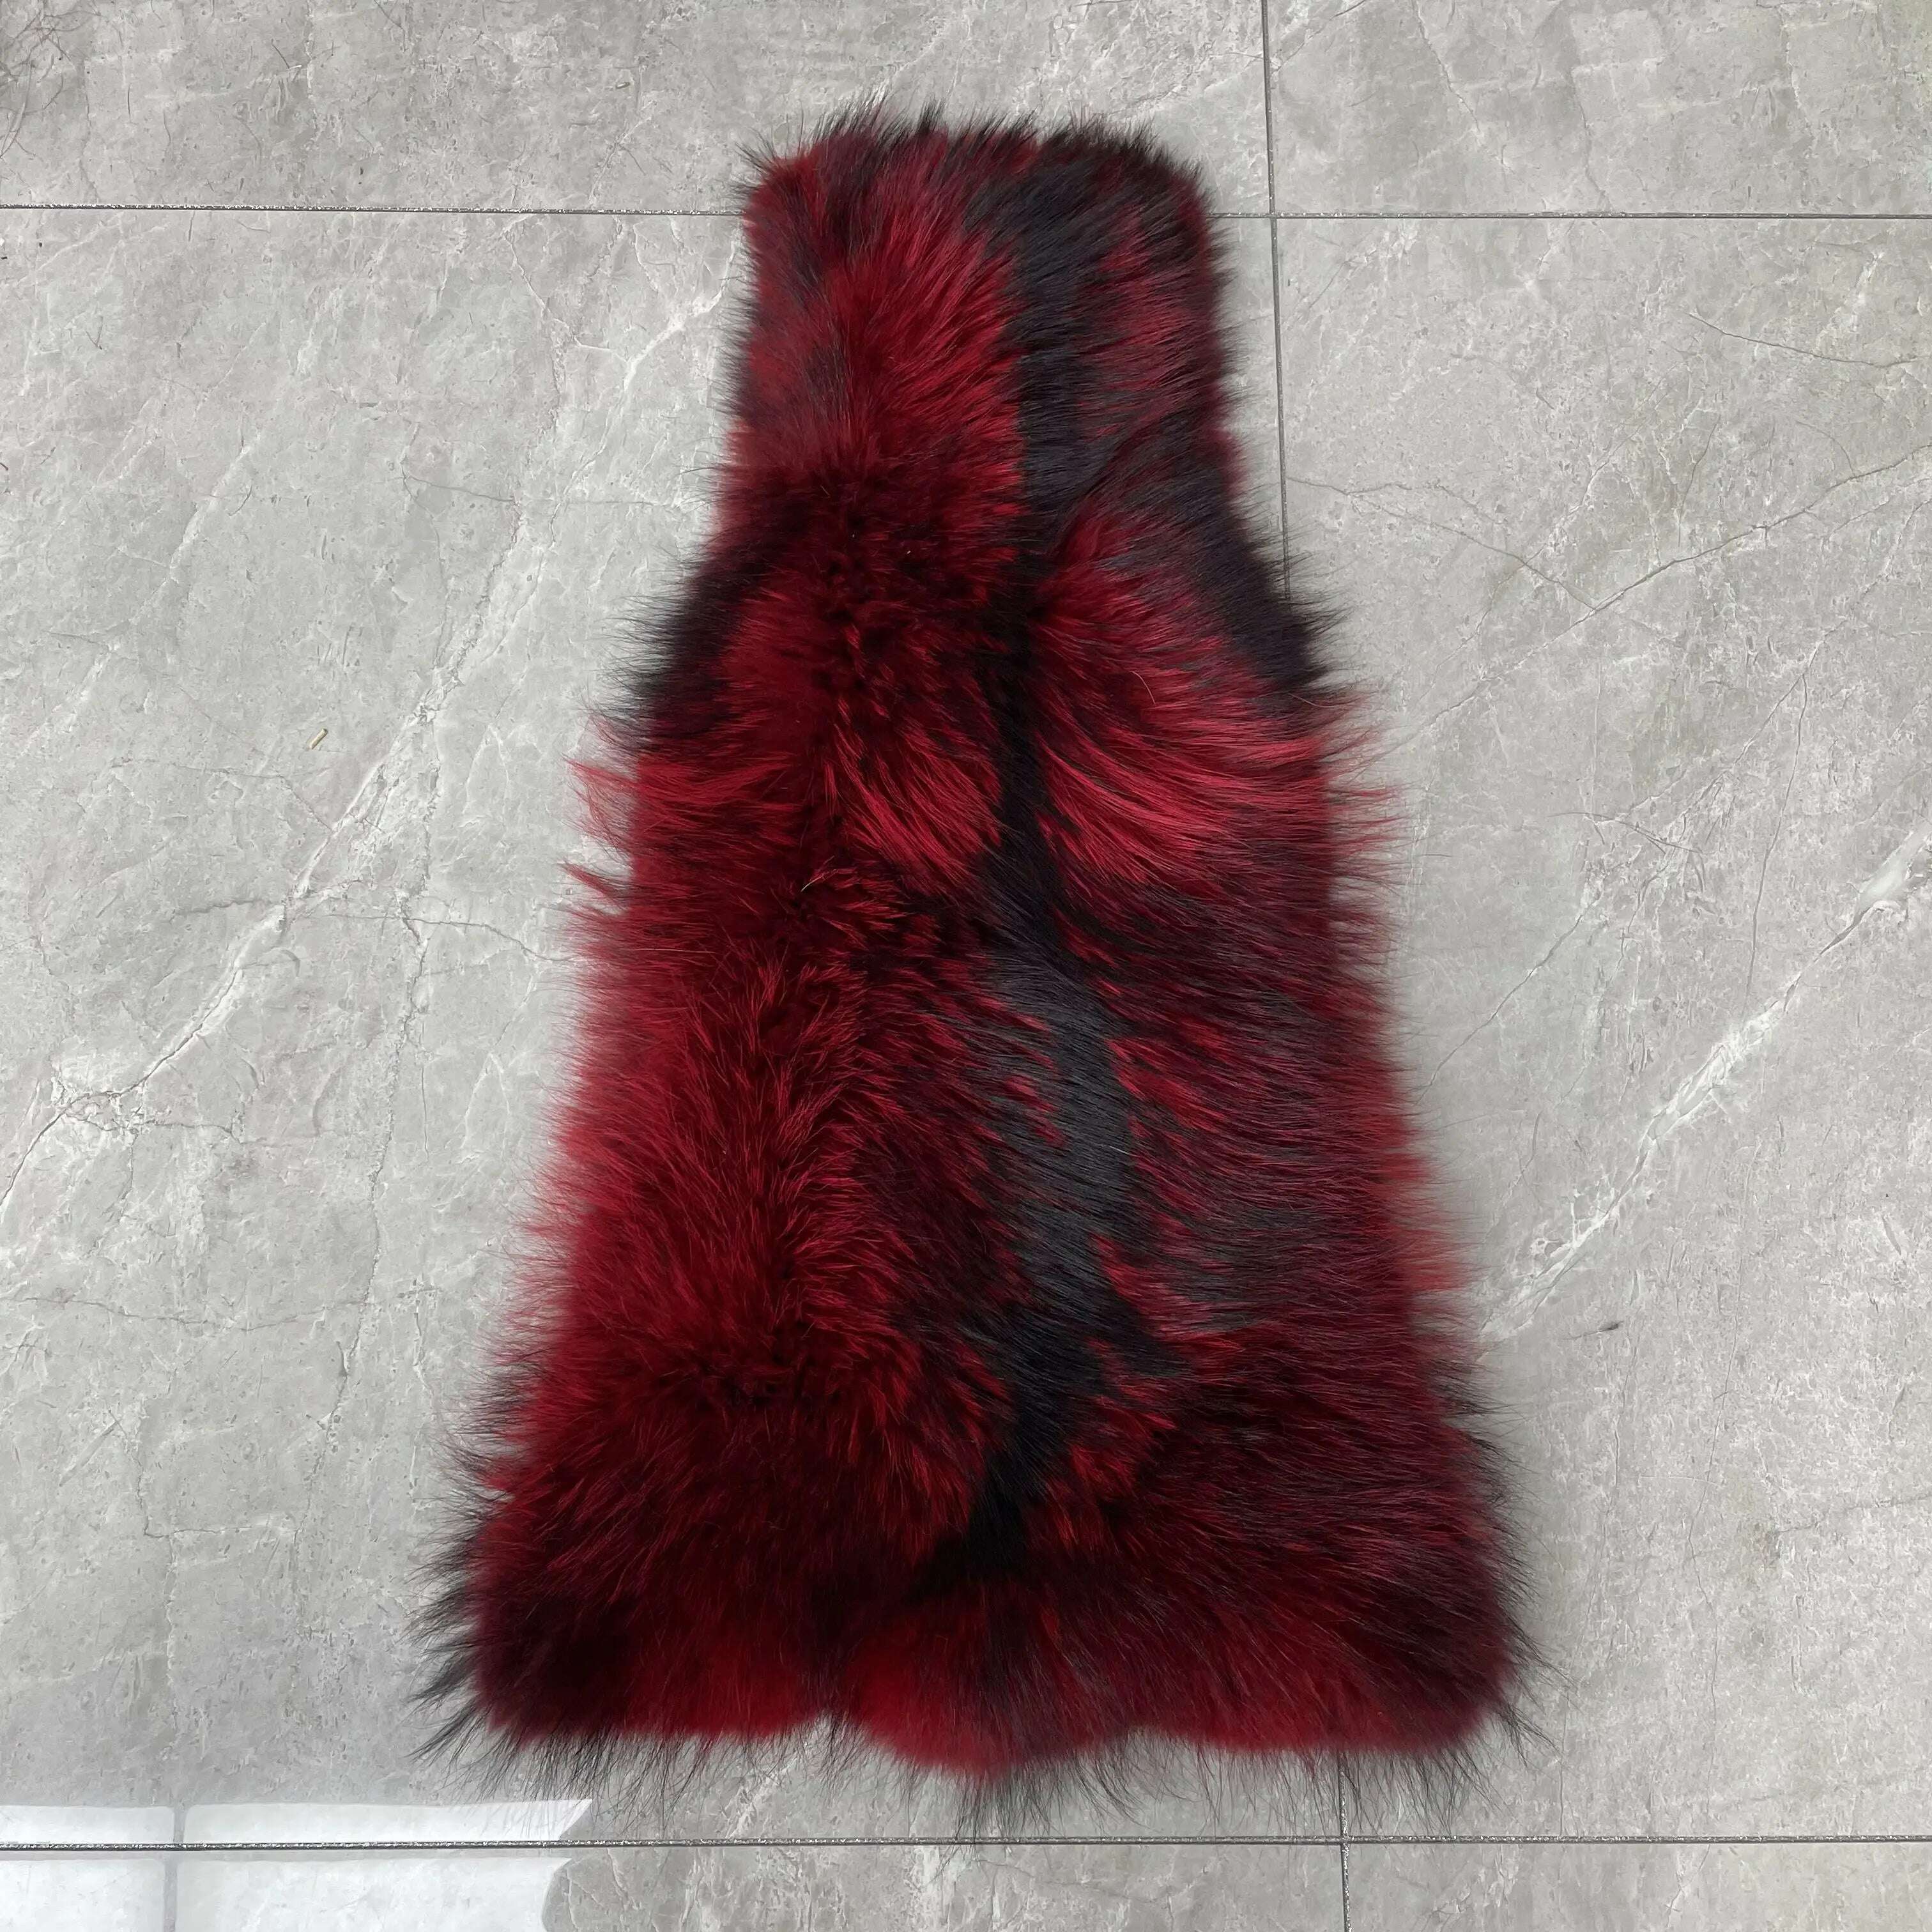 KIMLUD, Real Raccoon Fur Jacket Men Fashion Coat Winter Warm Long Style, RED / XS(88cm), KIMLUD Womens Clothes